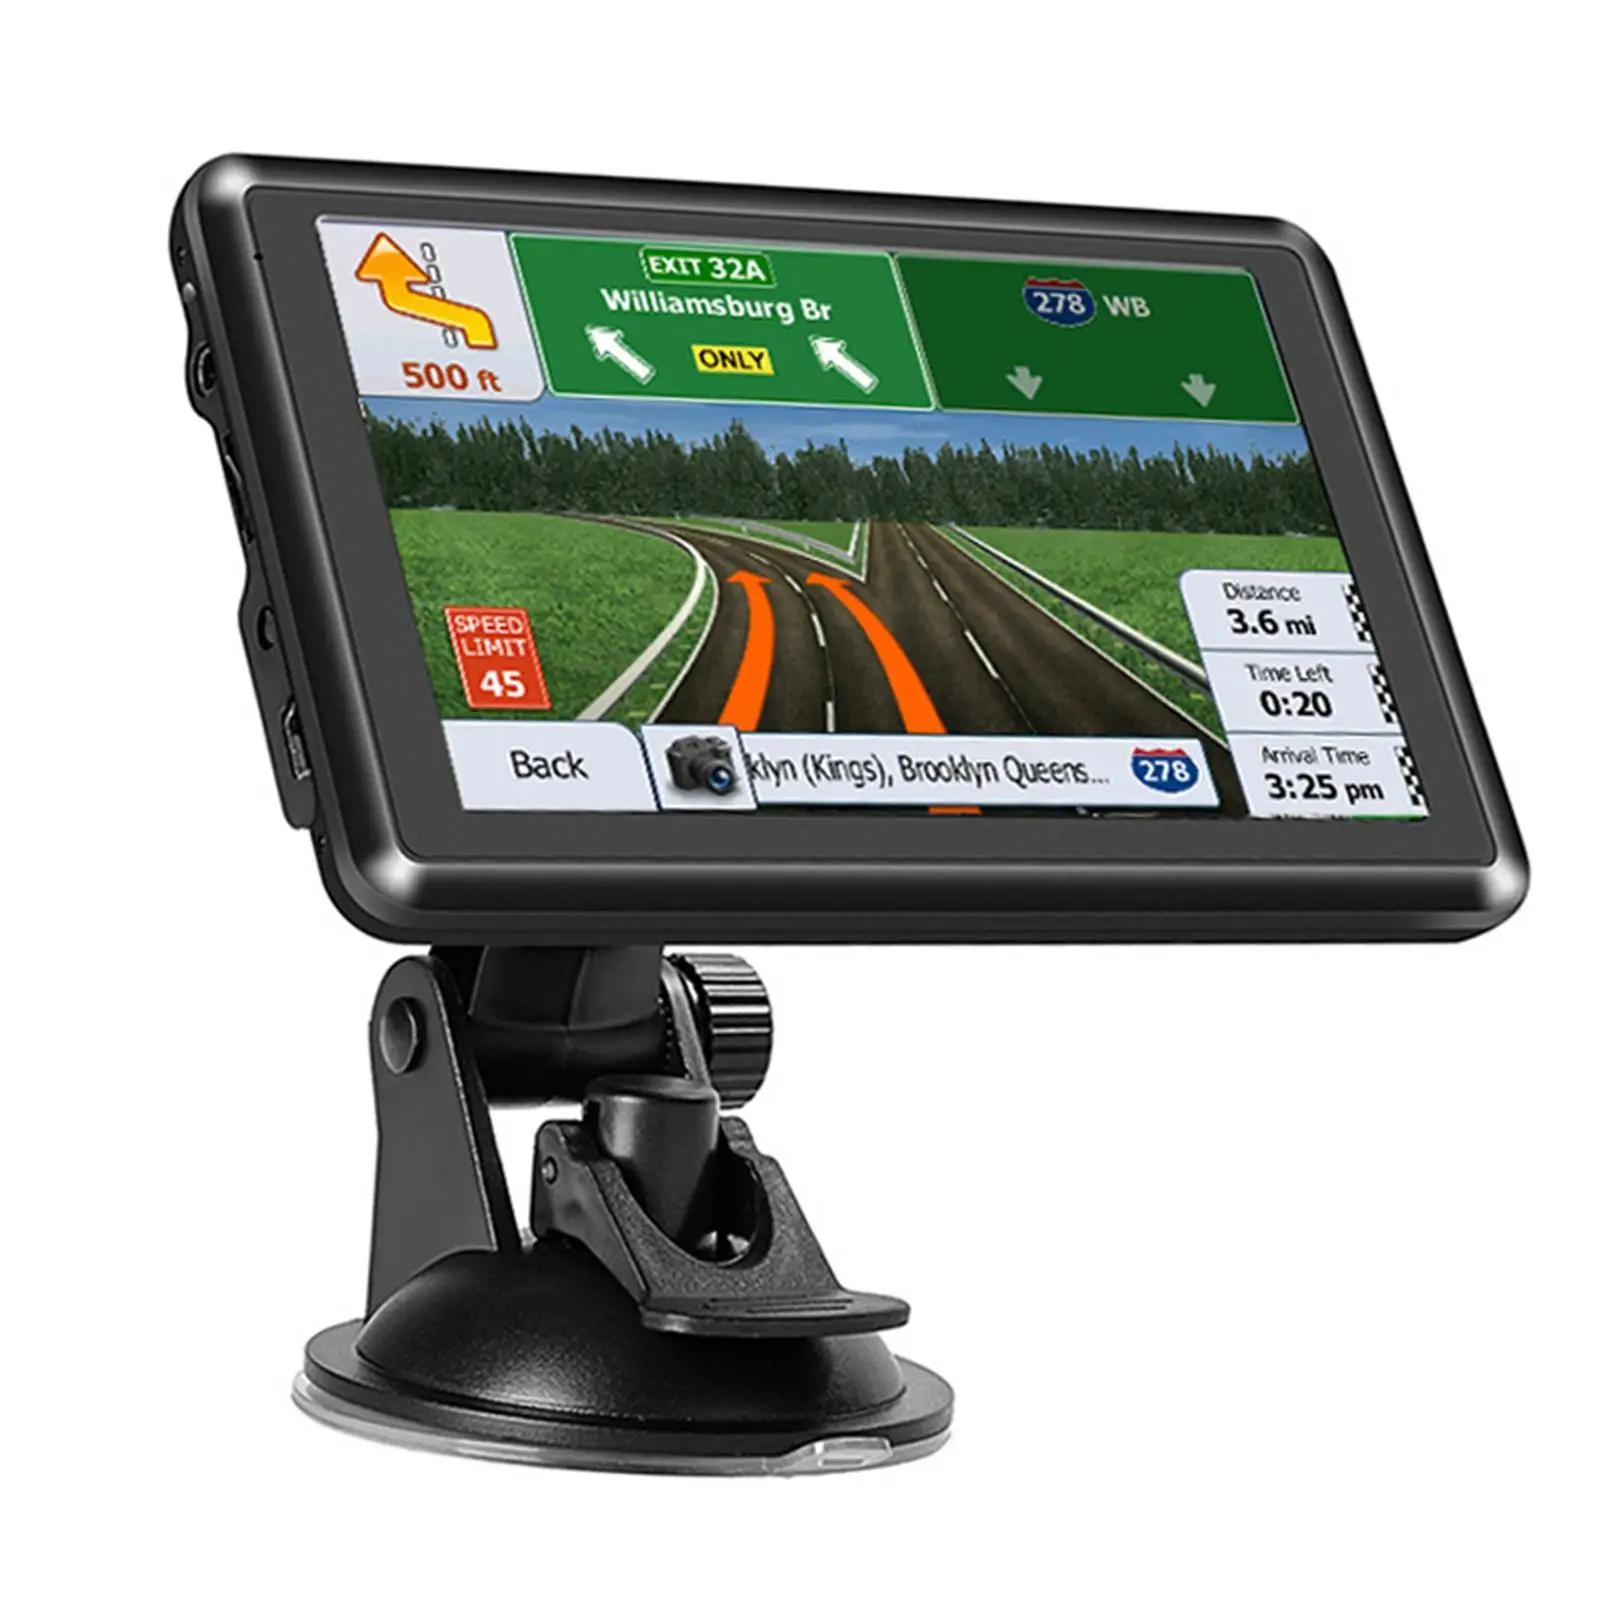 5 inch Touch Screen Car Truck GPS Navigation GPS Navigator, 8G &128 MB Multifunctional Vehicle Spoken Direction Driving Alert